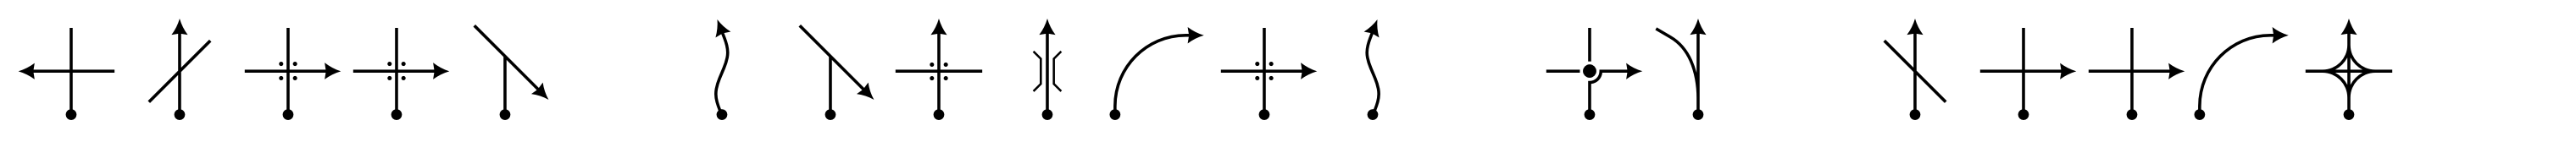 Rally Symbols 2D Arrow